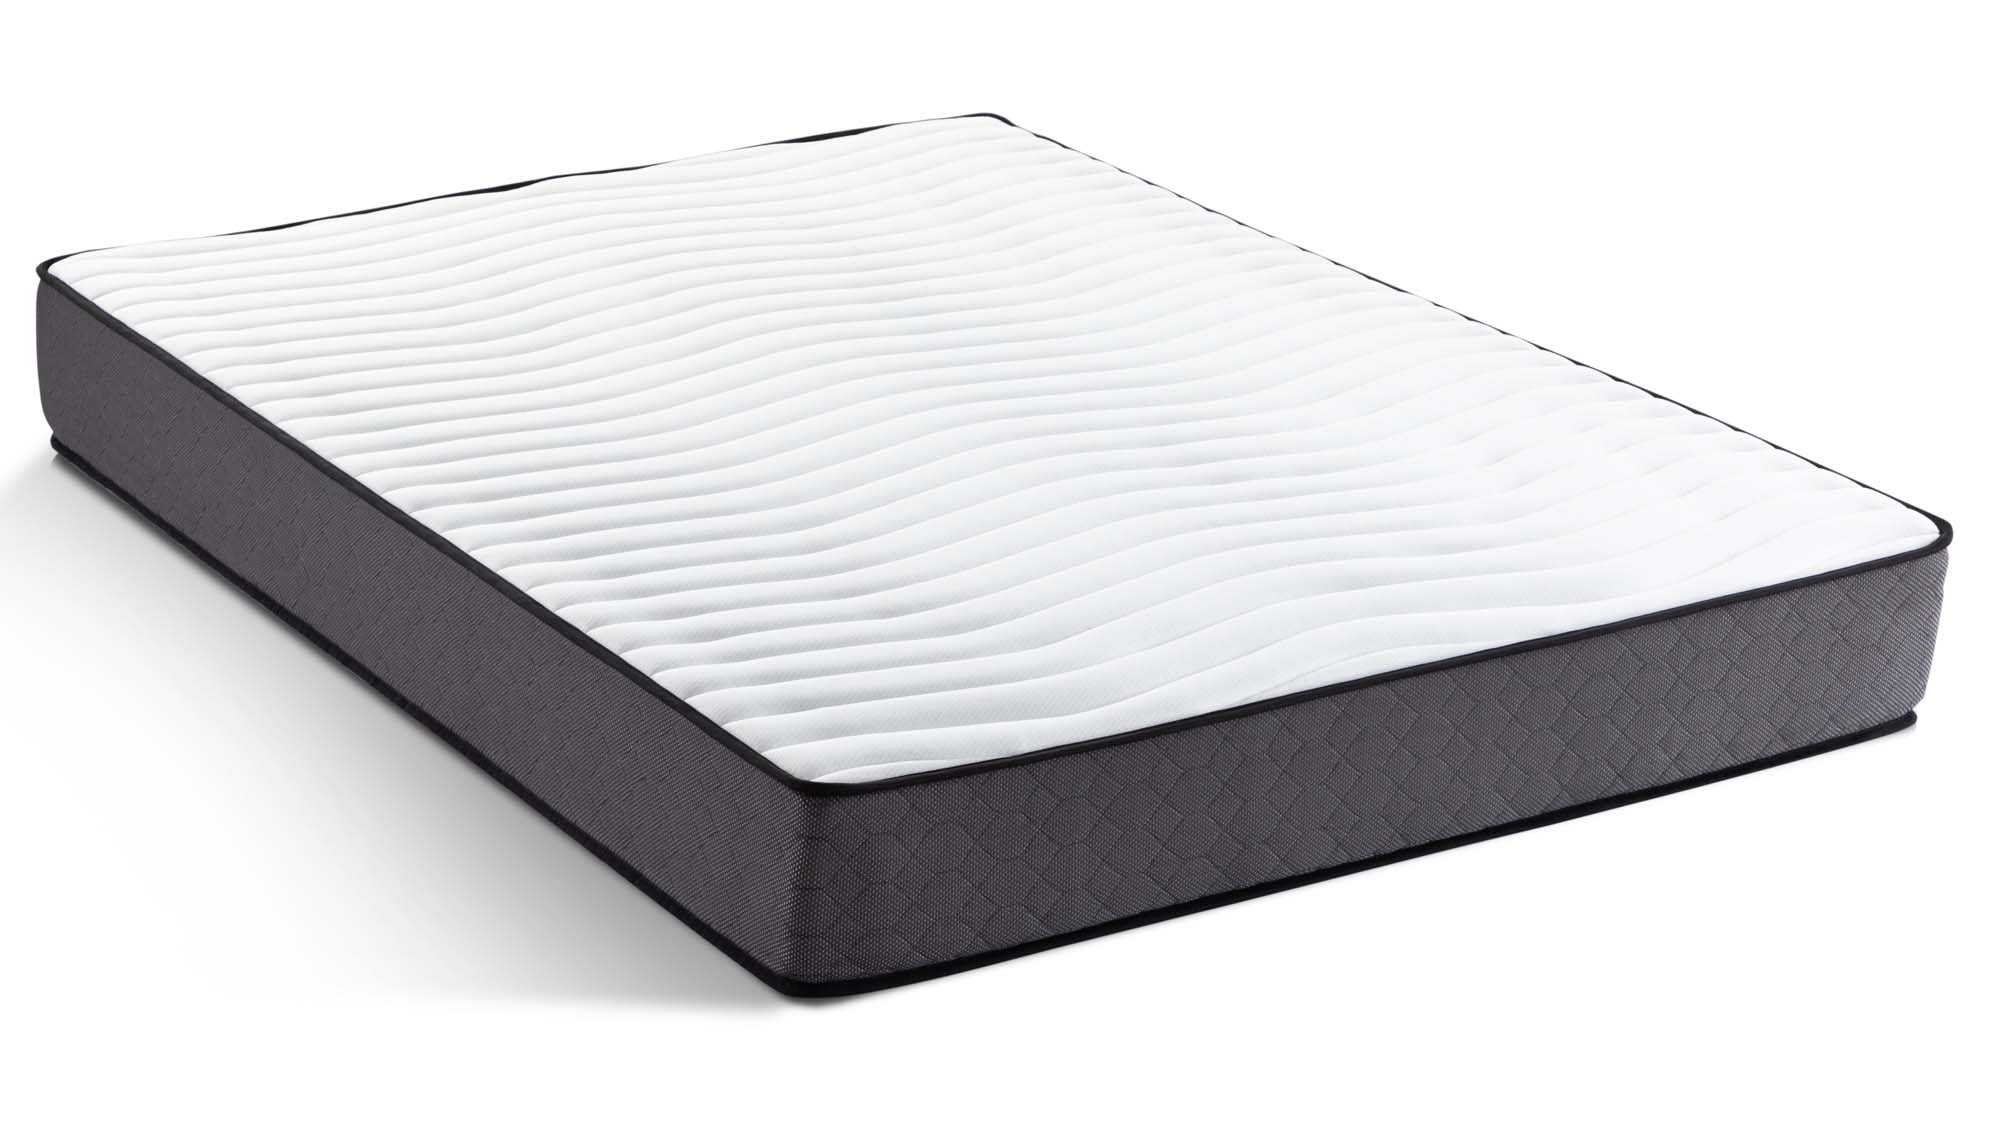 weekender 10 inch hybrid mattress coil count